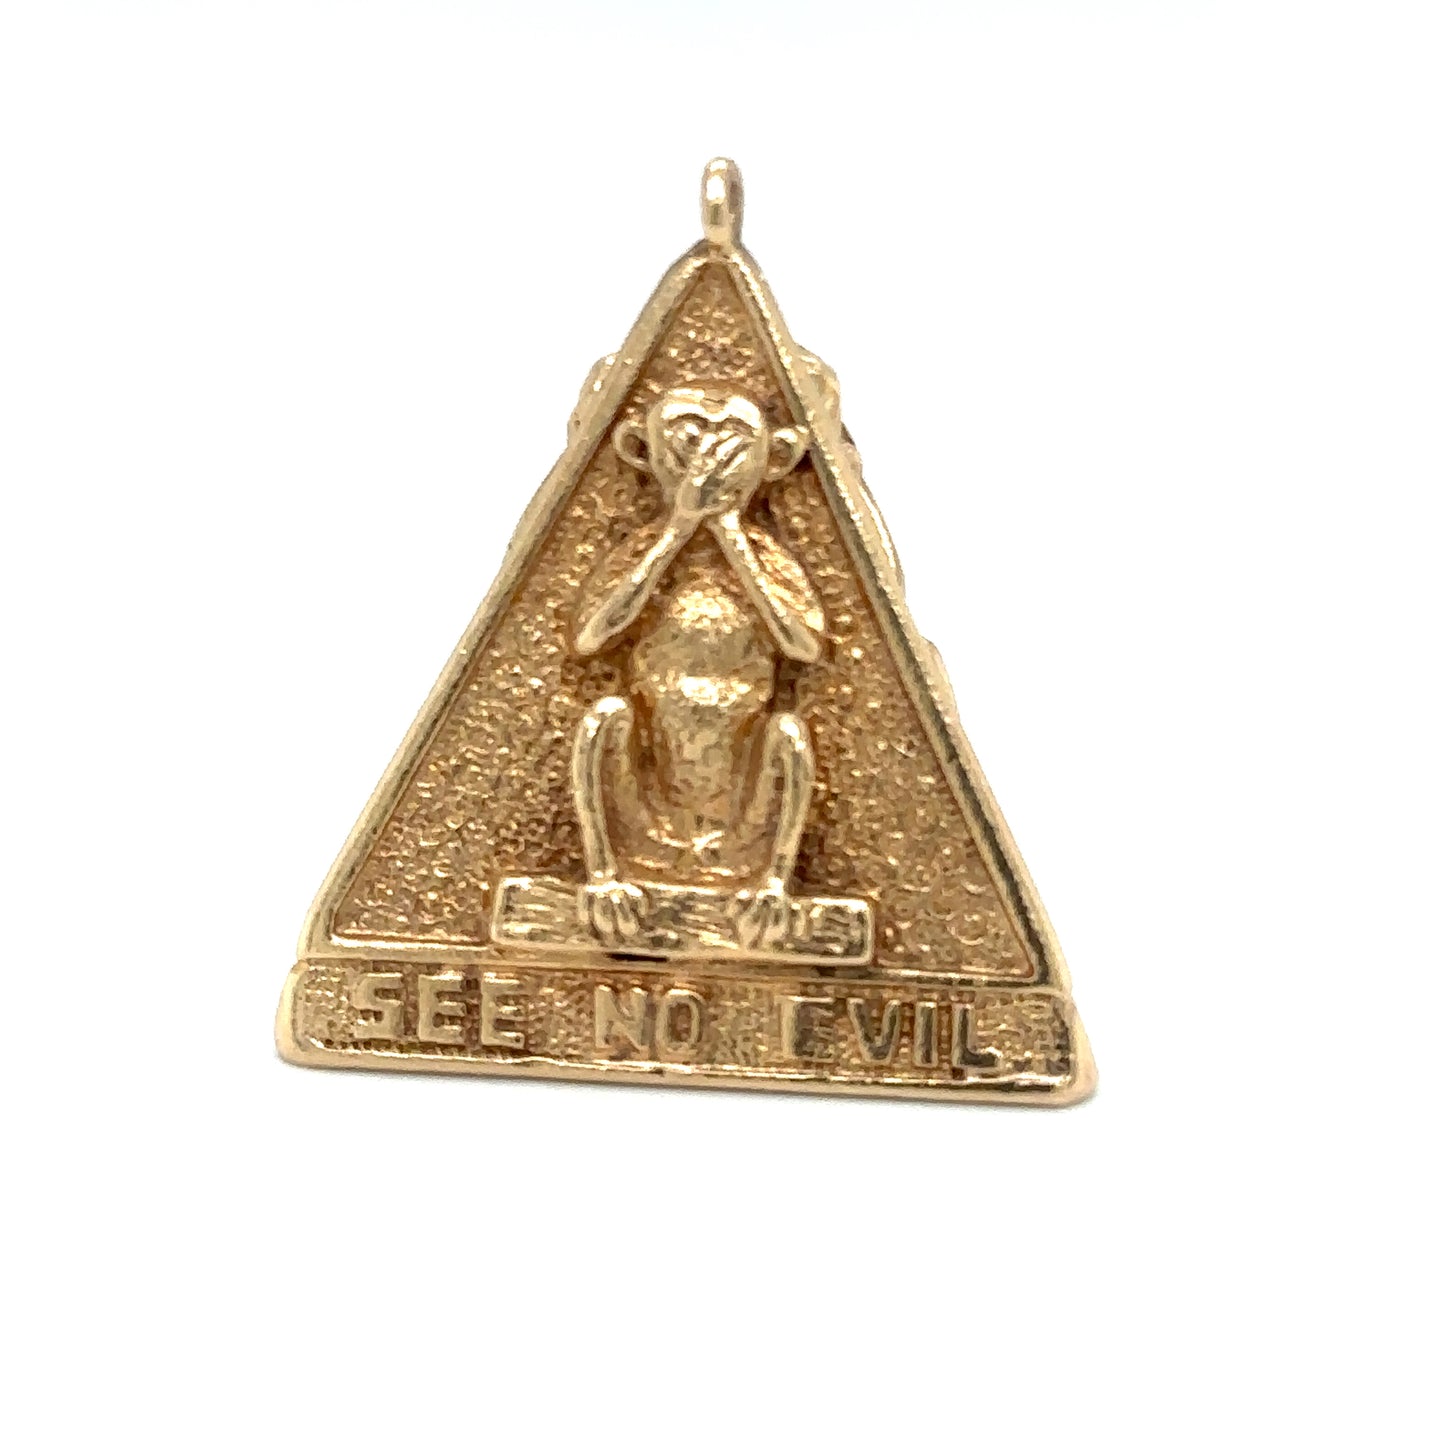 Circa 1980s Three Wise Monkeys Pyramid Pendant in 14K Gold